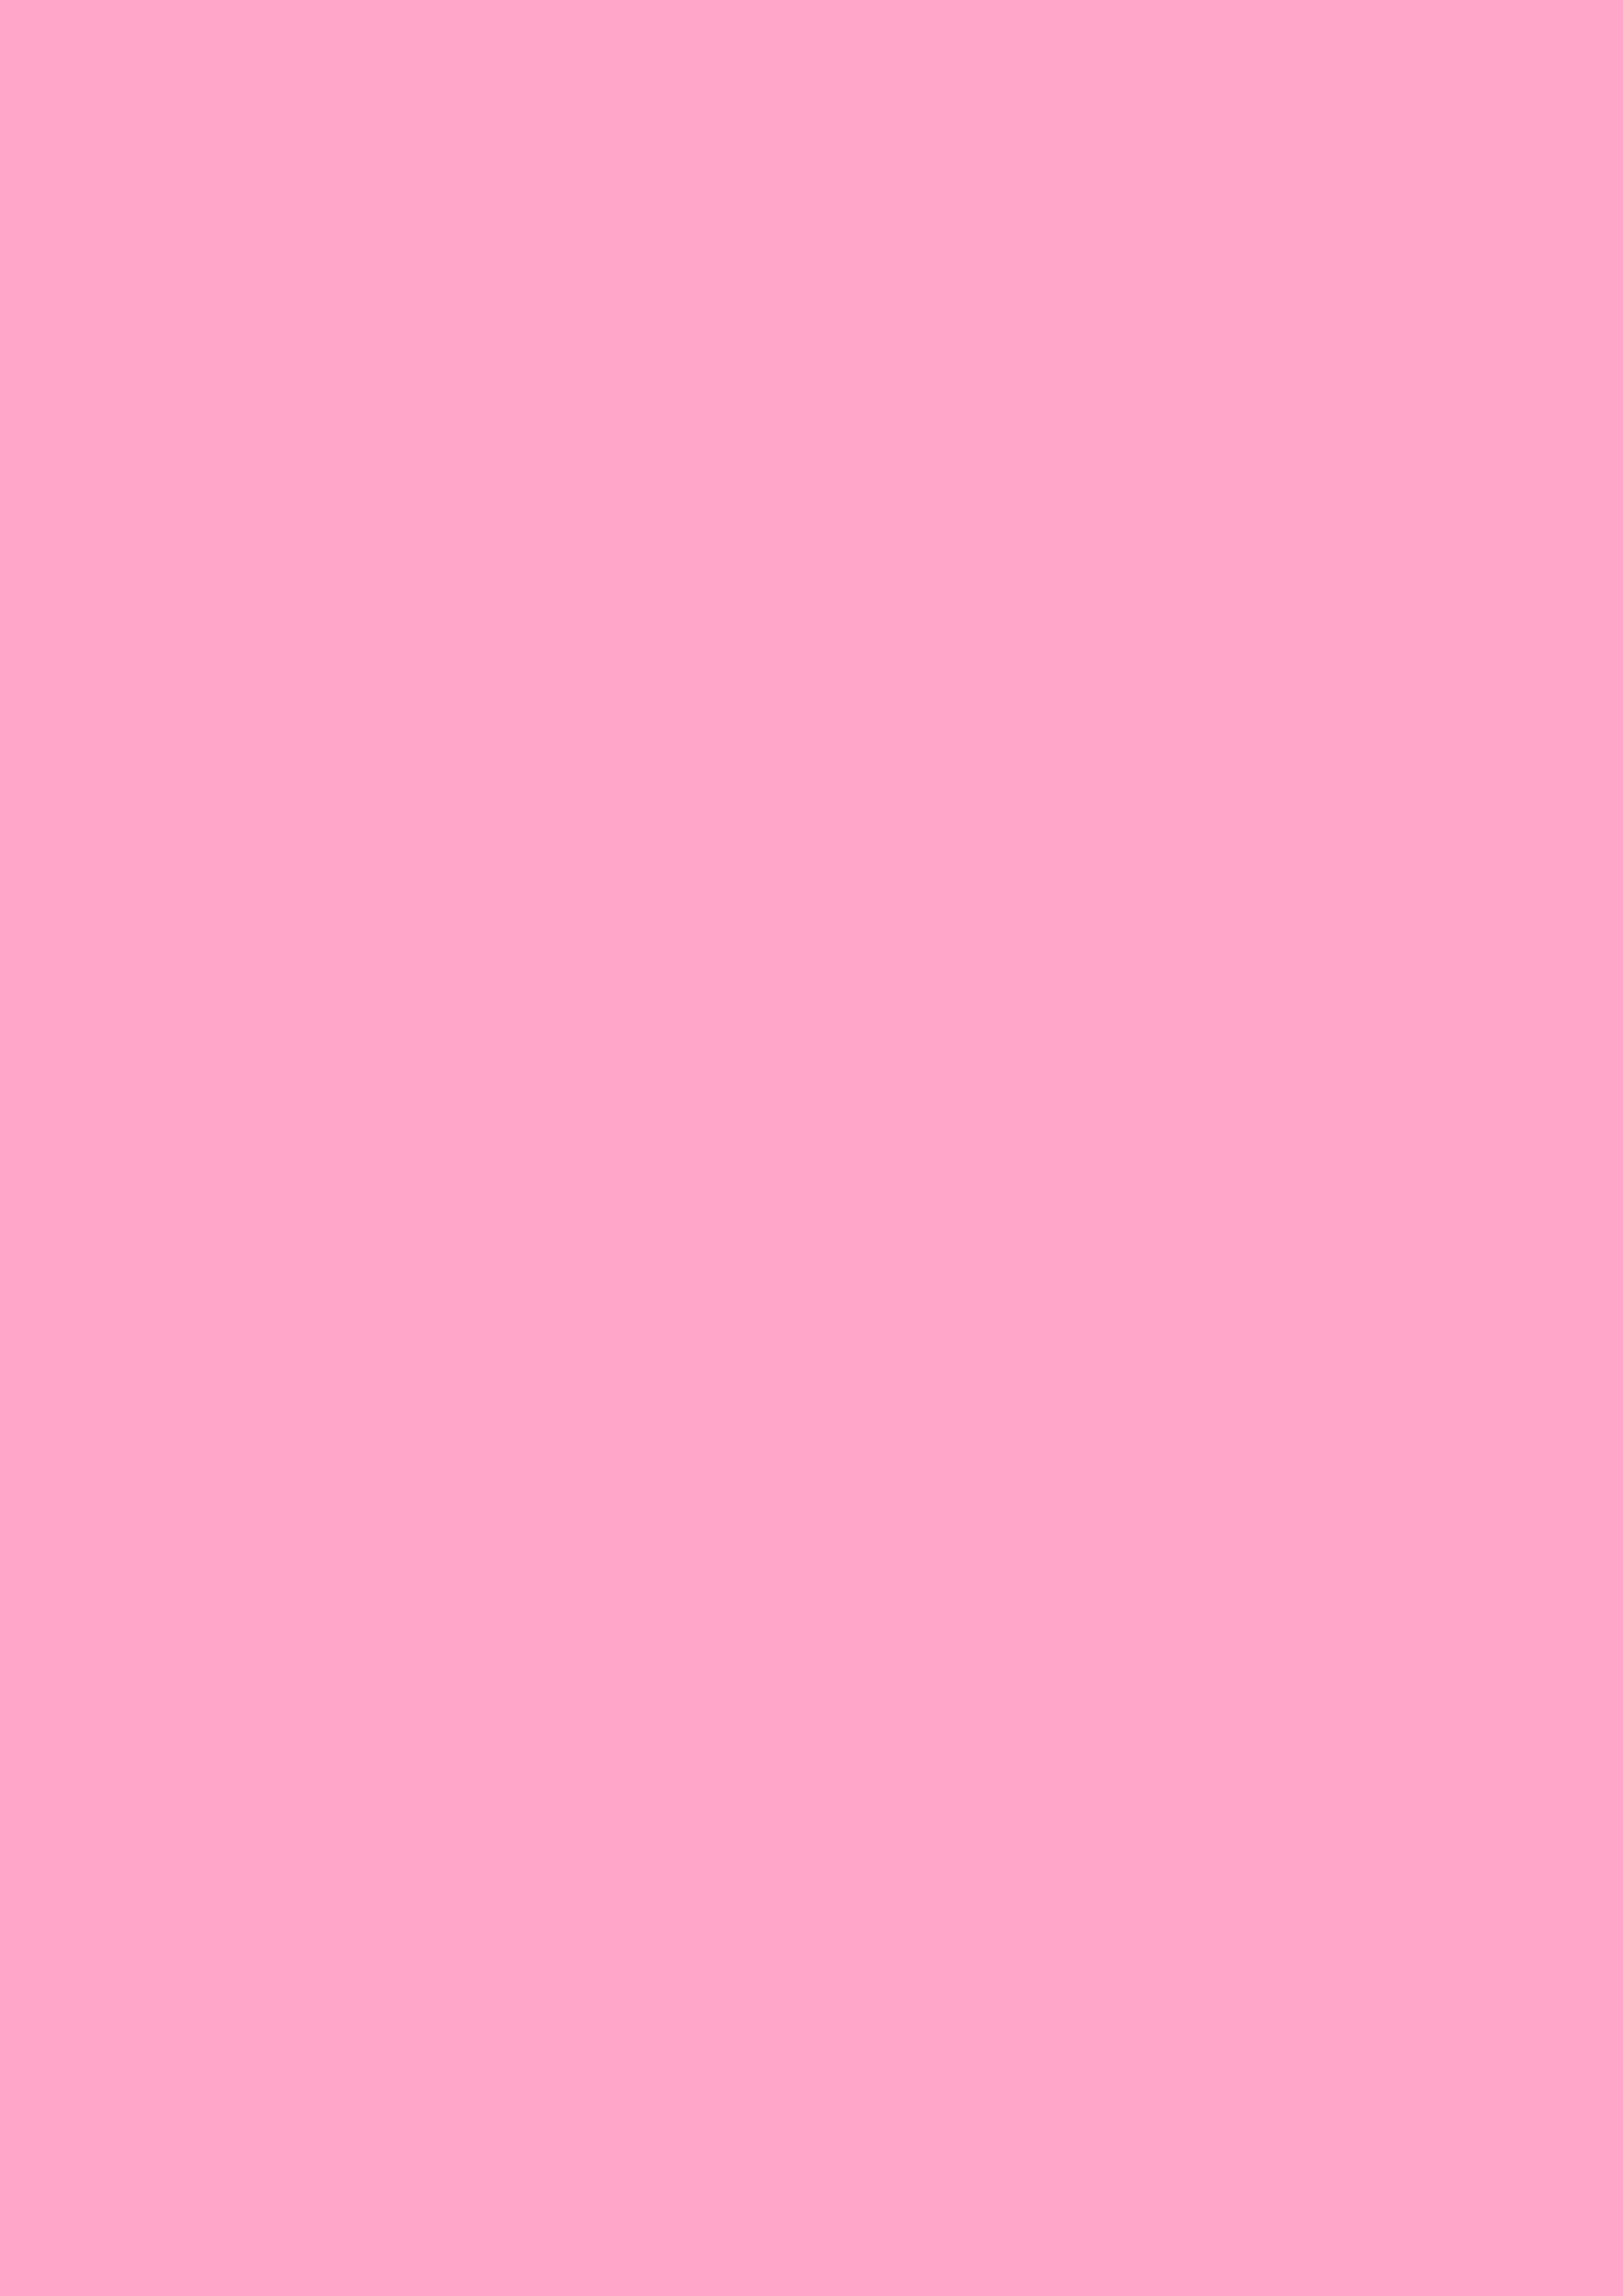 2480x3508 Carnation Pink Solid Color Background